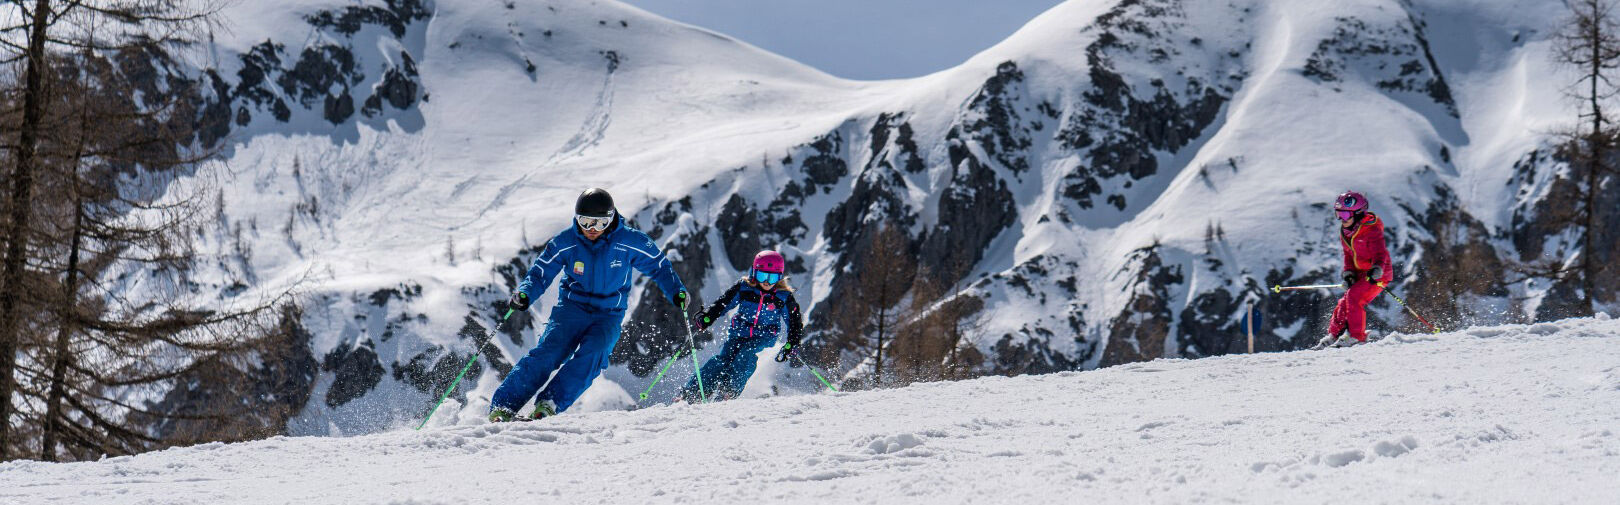 Ski school Flachau - ski group courses for children - beginners to advanced